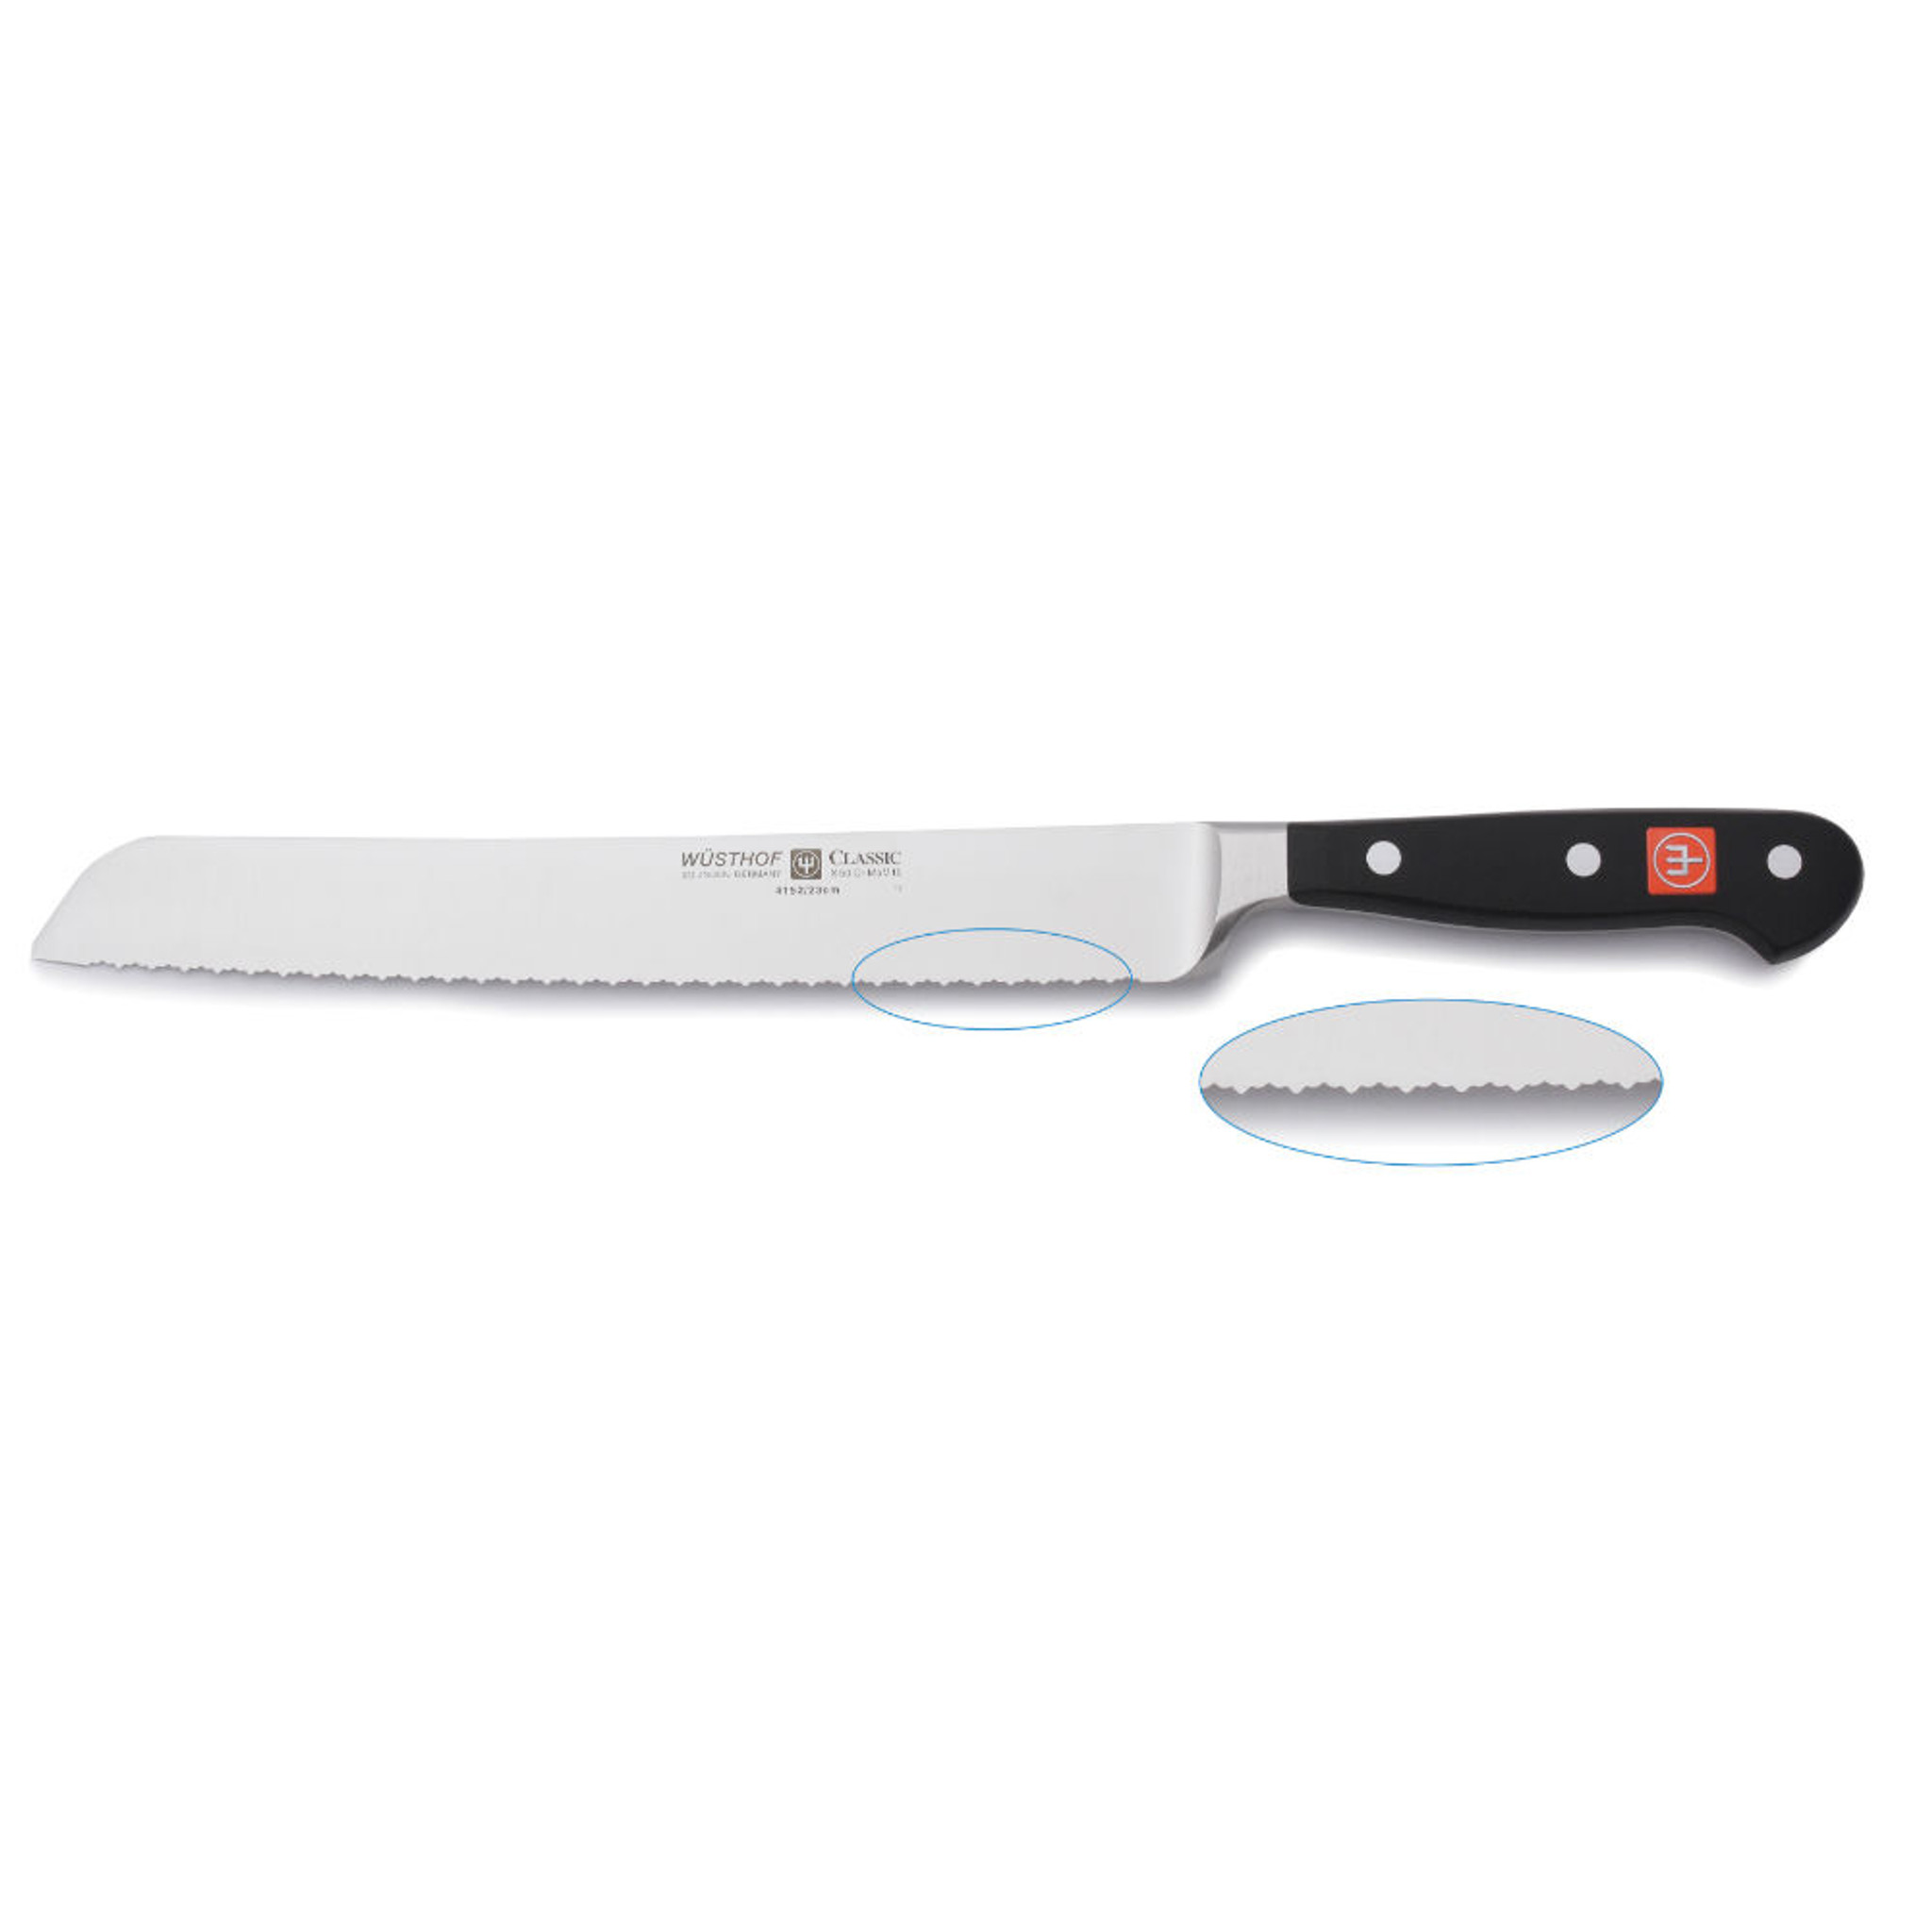 Wusthof Classic Bread Knife, 9 Double-Serrated 4152/23